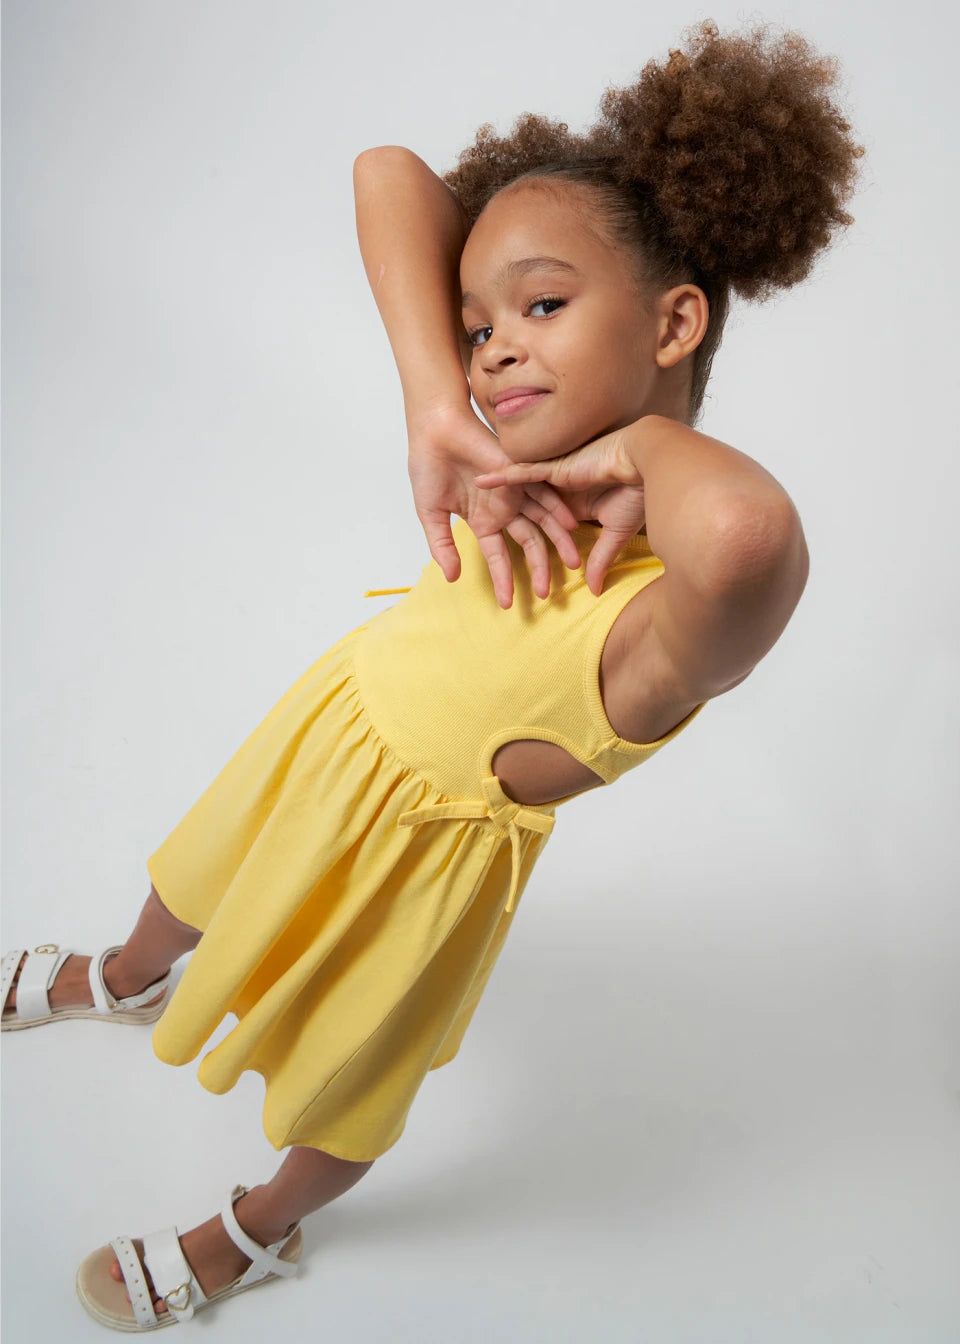 Yellow dress for kid girl